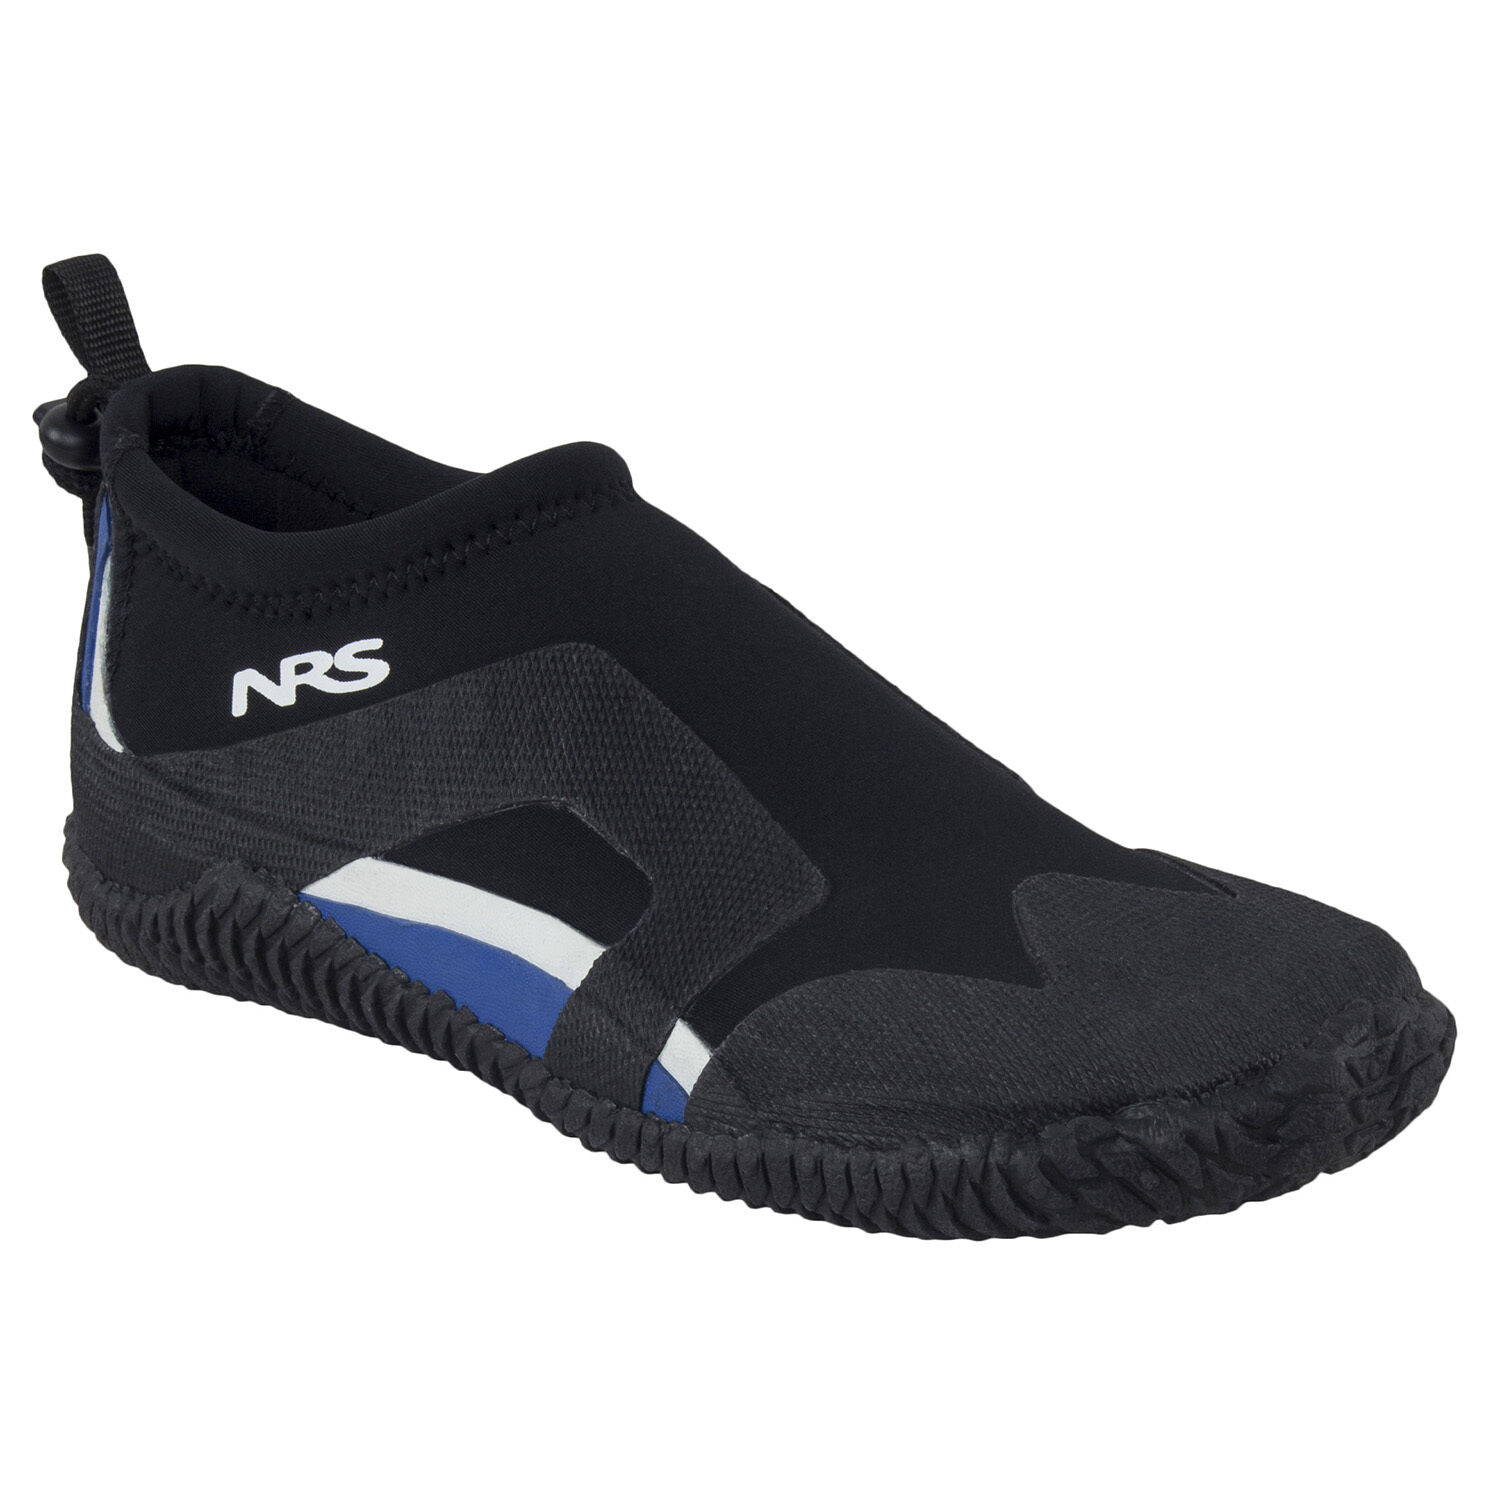 Details about   Mens Water Shoes Size 12 M Black West Marine Boat Socks Slip On 